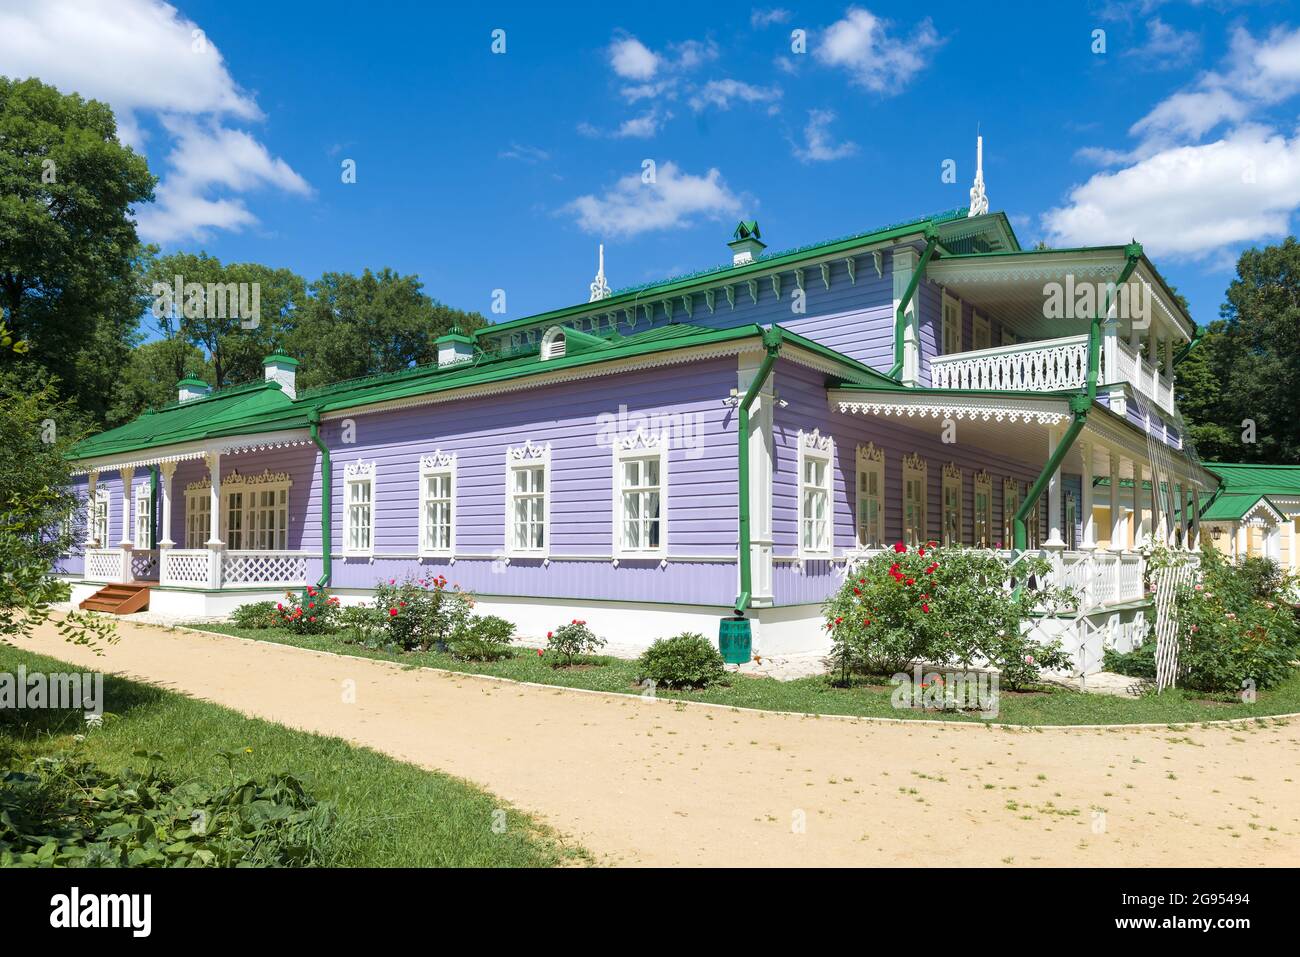 SPASSKOE-LUTOVINOVO, RUSSIA - JULY 06, 2021: The main manor house in the estate of the mother of the Russian writer Turgenev 'Spasskoye-Lutovinovo' Stock Photo